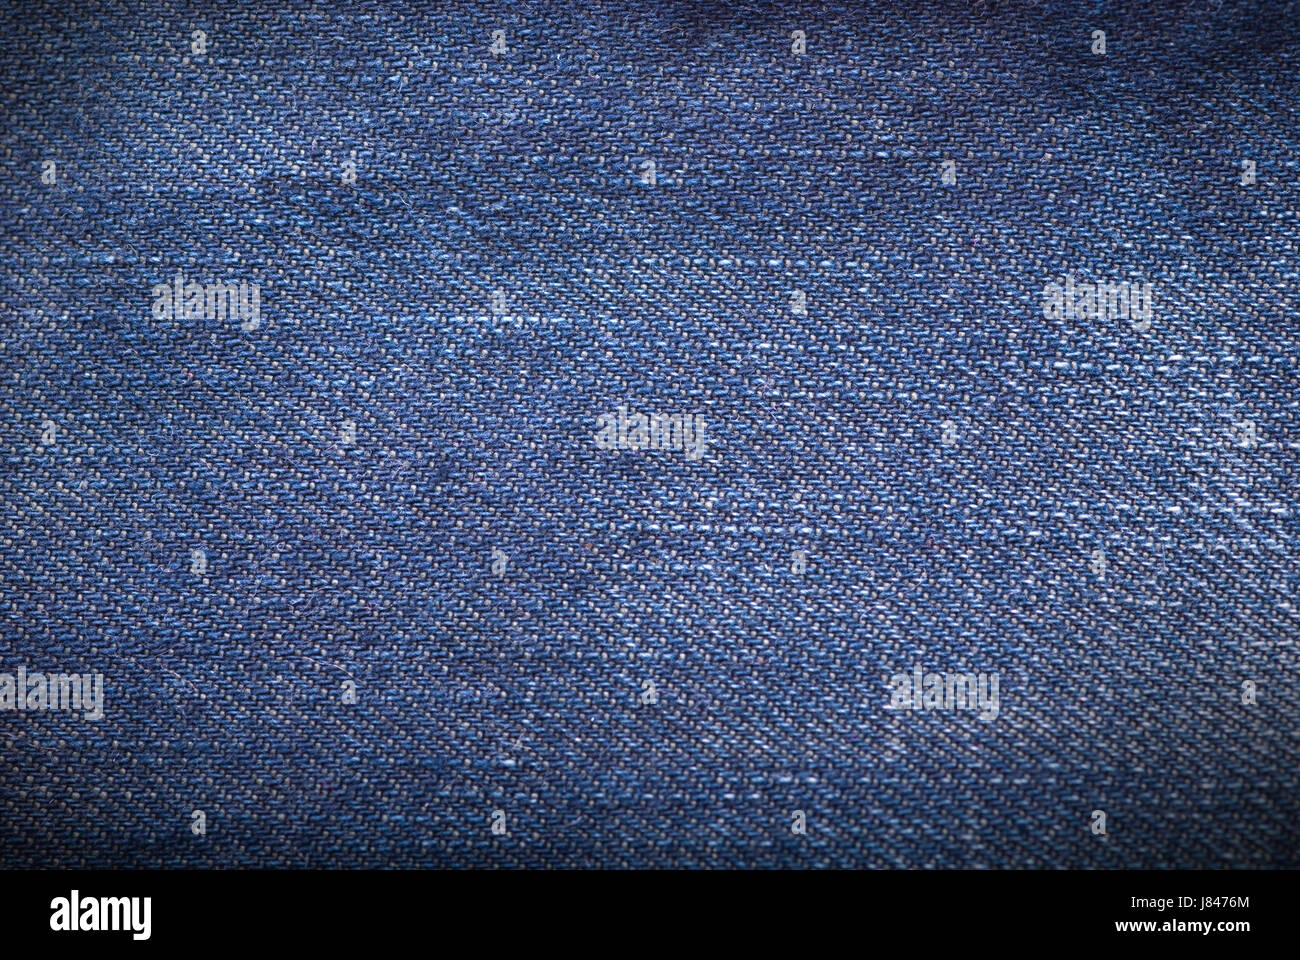 blue detail fashion colour closeup jeans trousers jean trousers weave material Stock Photo